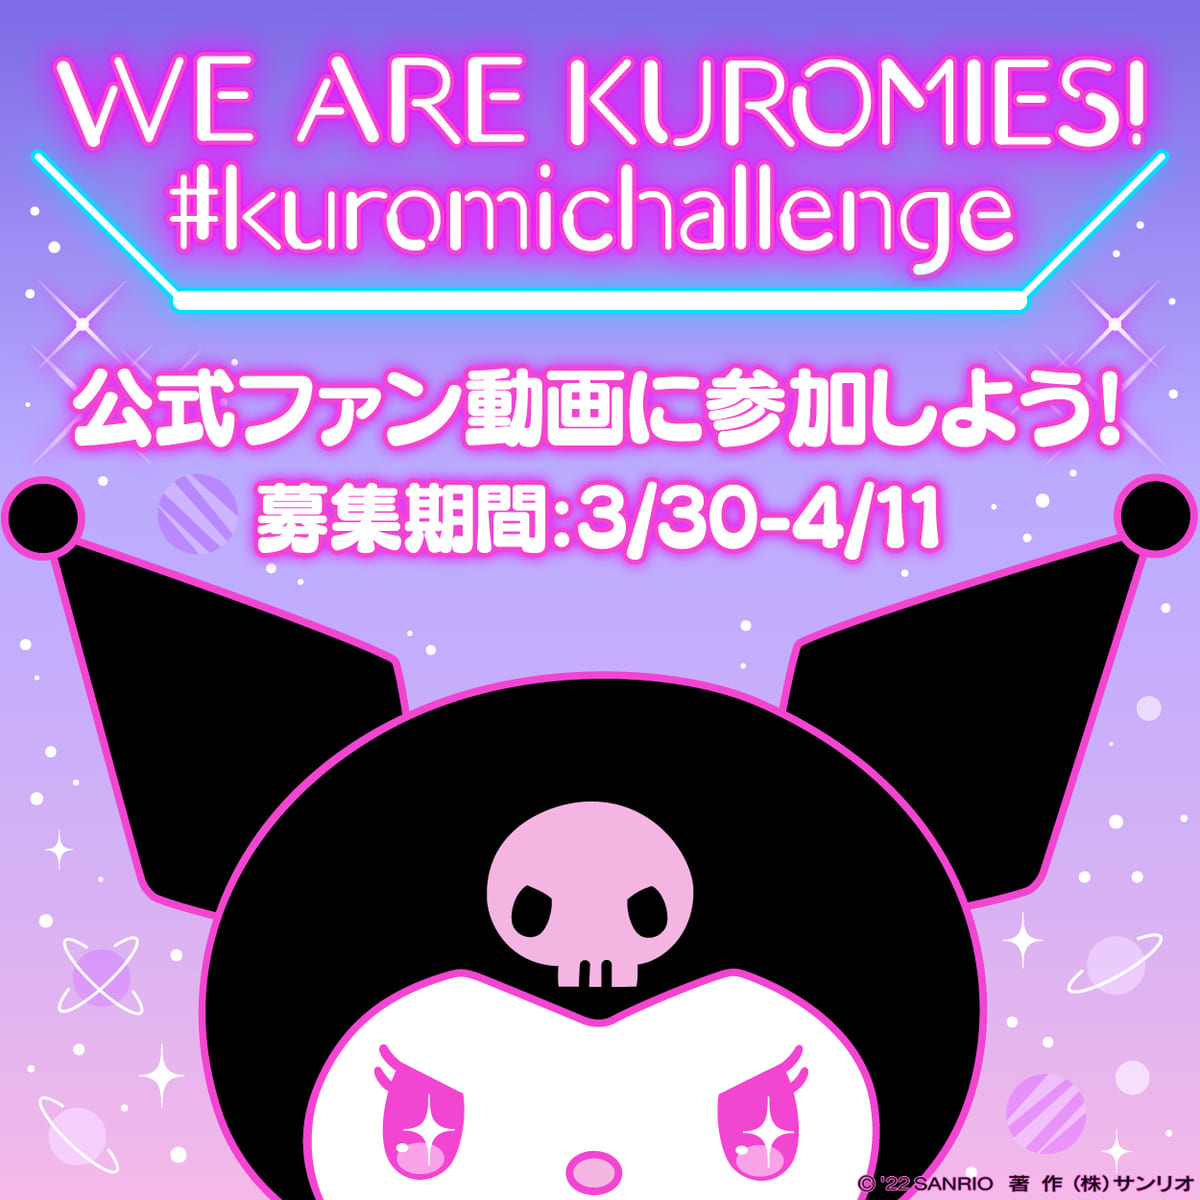 WE ARE KUROMIES!公式ファン動画に参加しよう キャンペーン